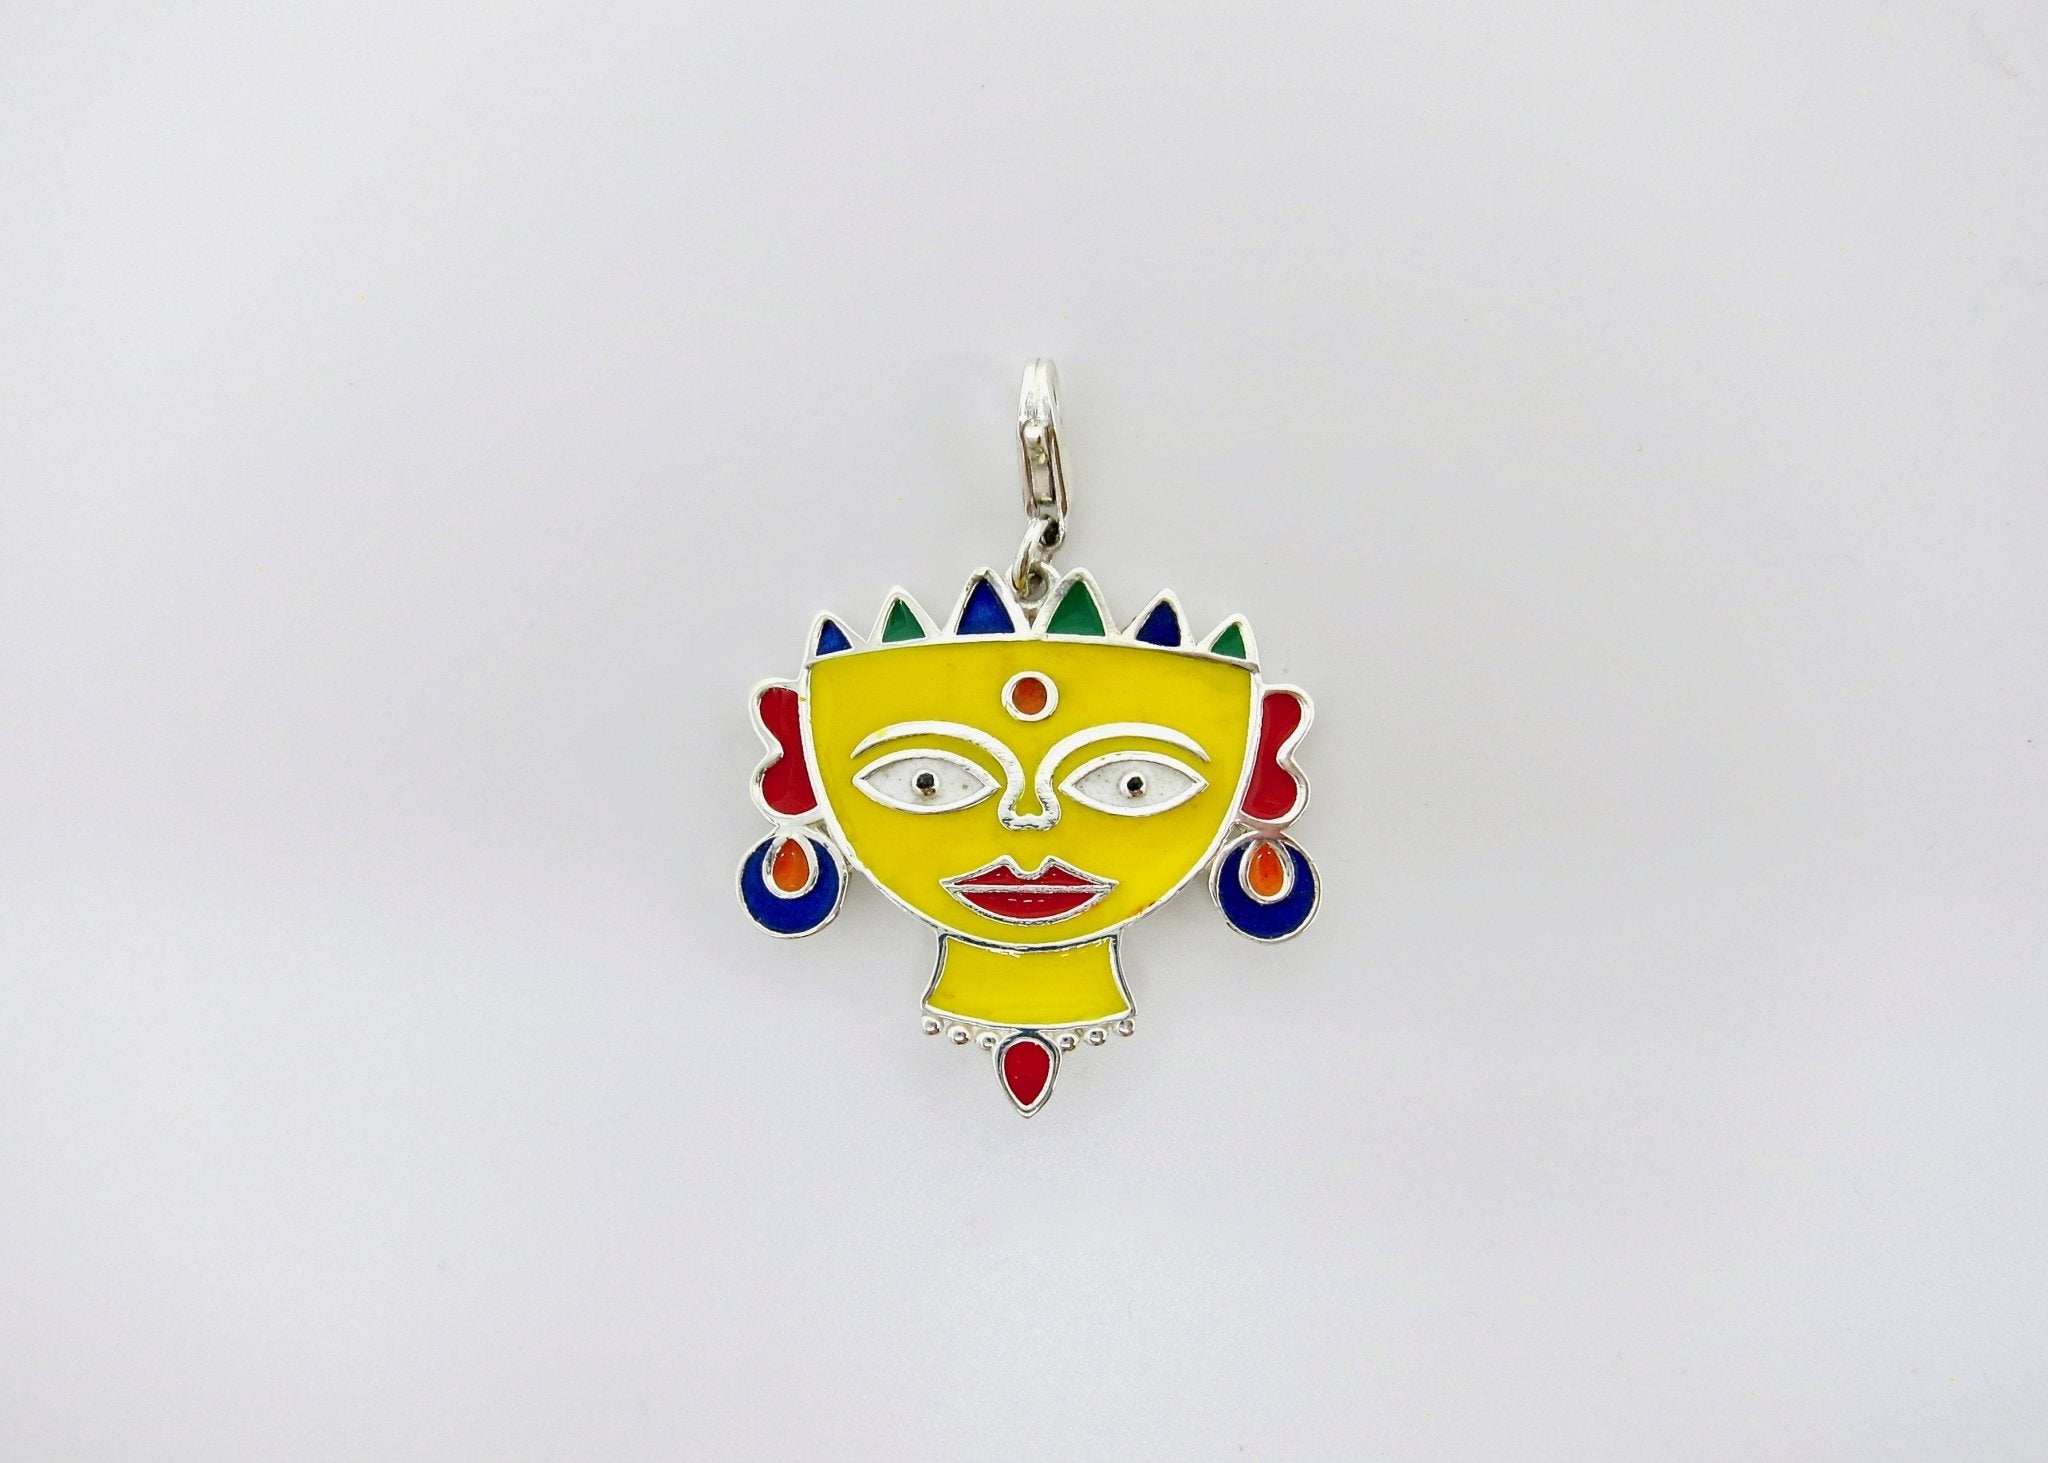 Indian folk art charms - Lai